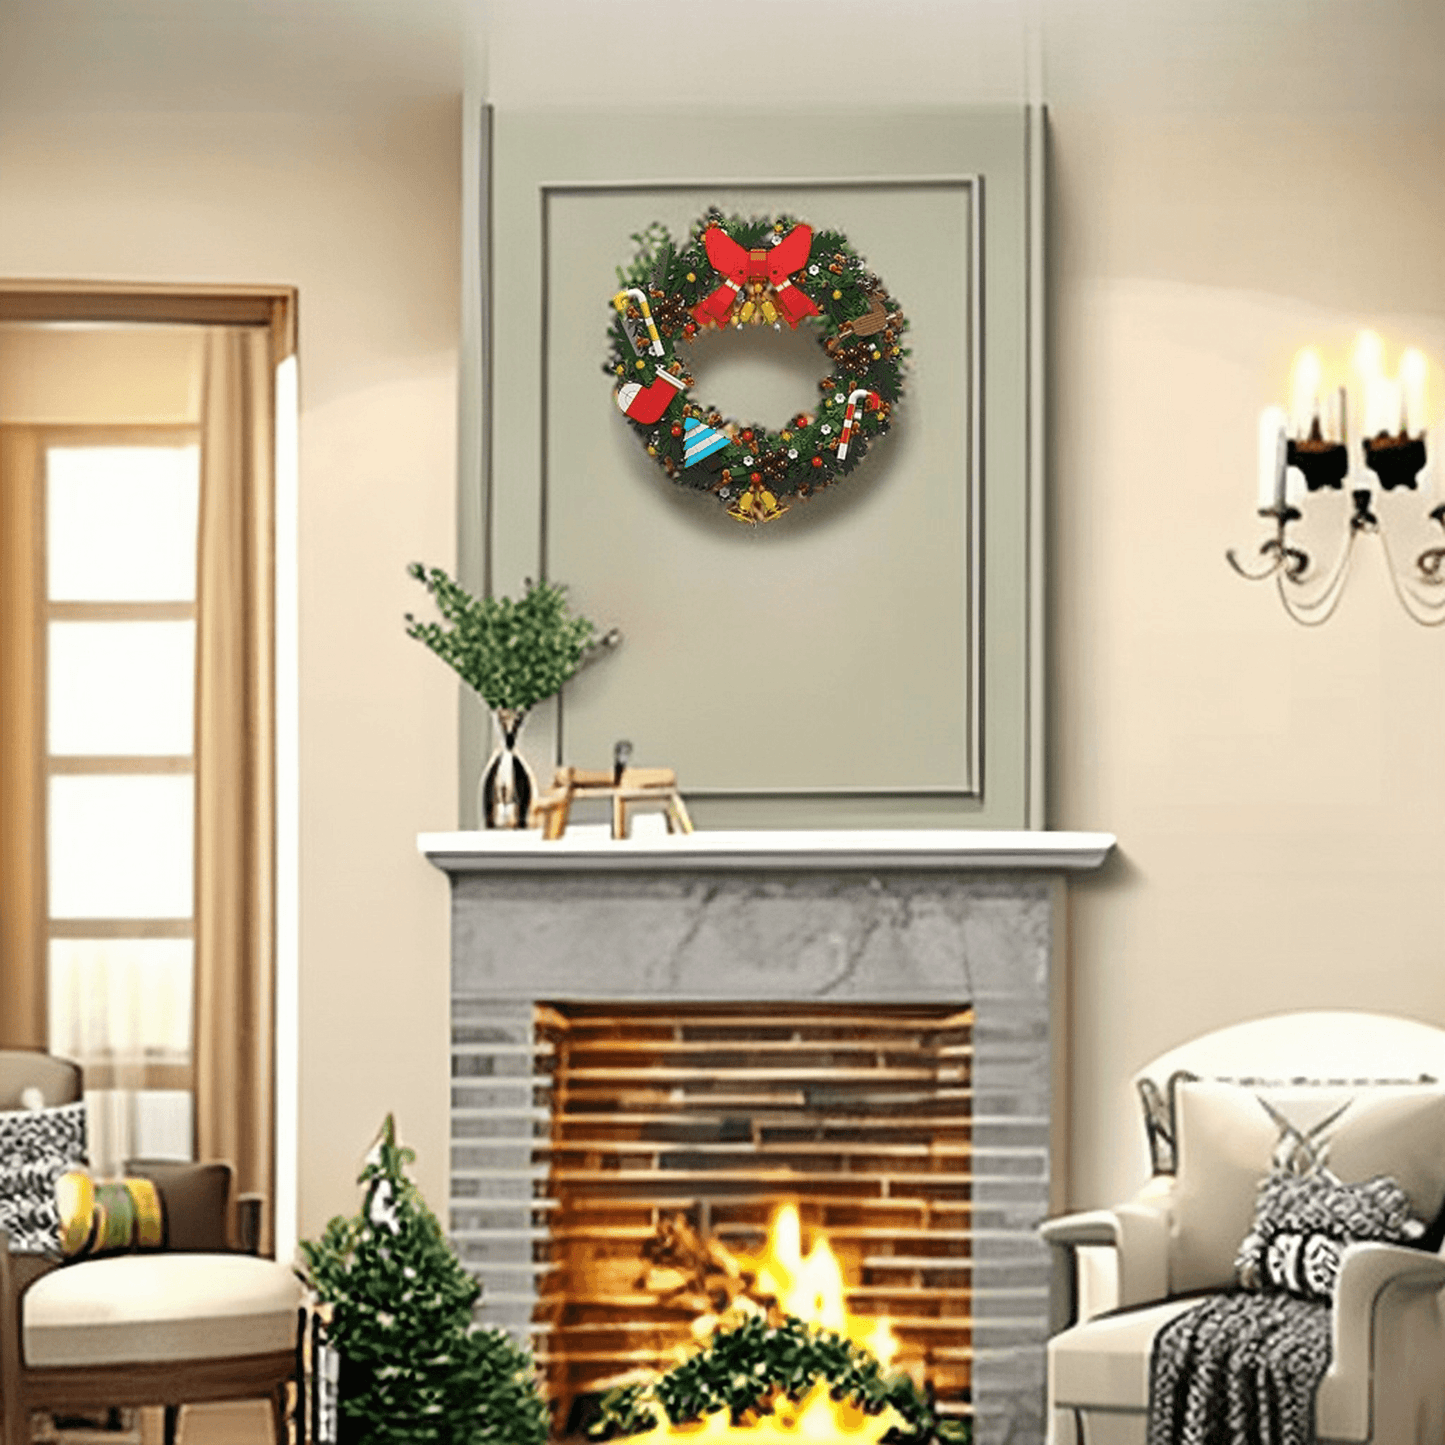 Christmas Wreath Mini Building Blocks Set with 1002 Pcs, eucalyptus wreath, Toys Christmas Collection Decoration Creative